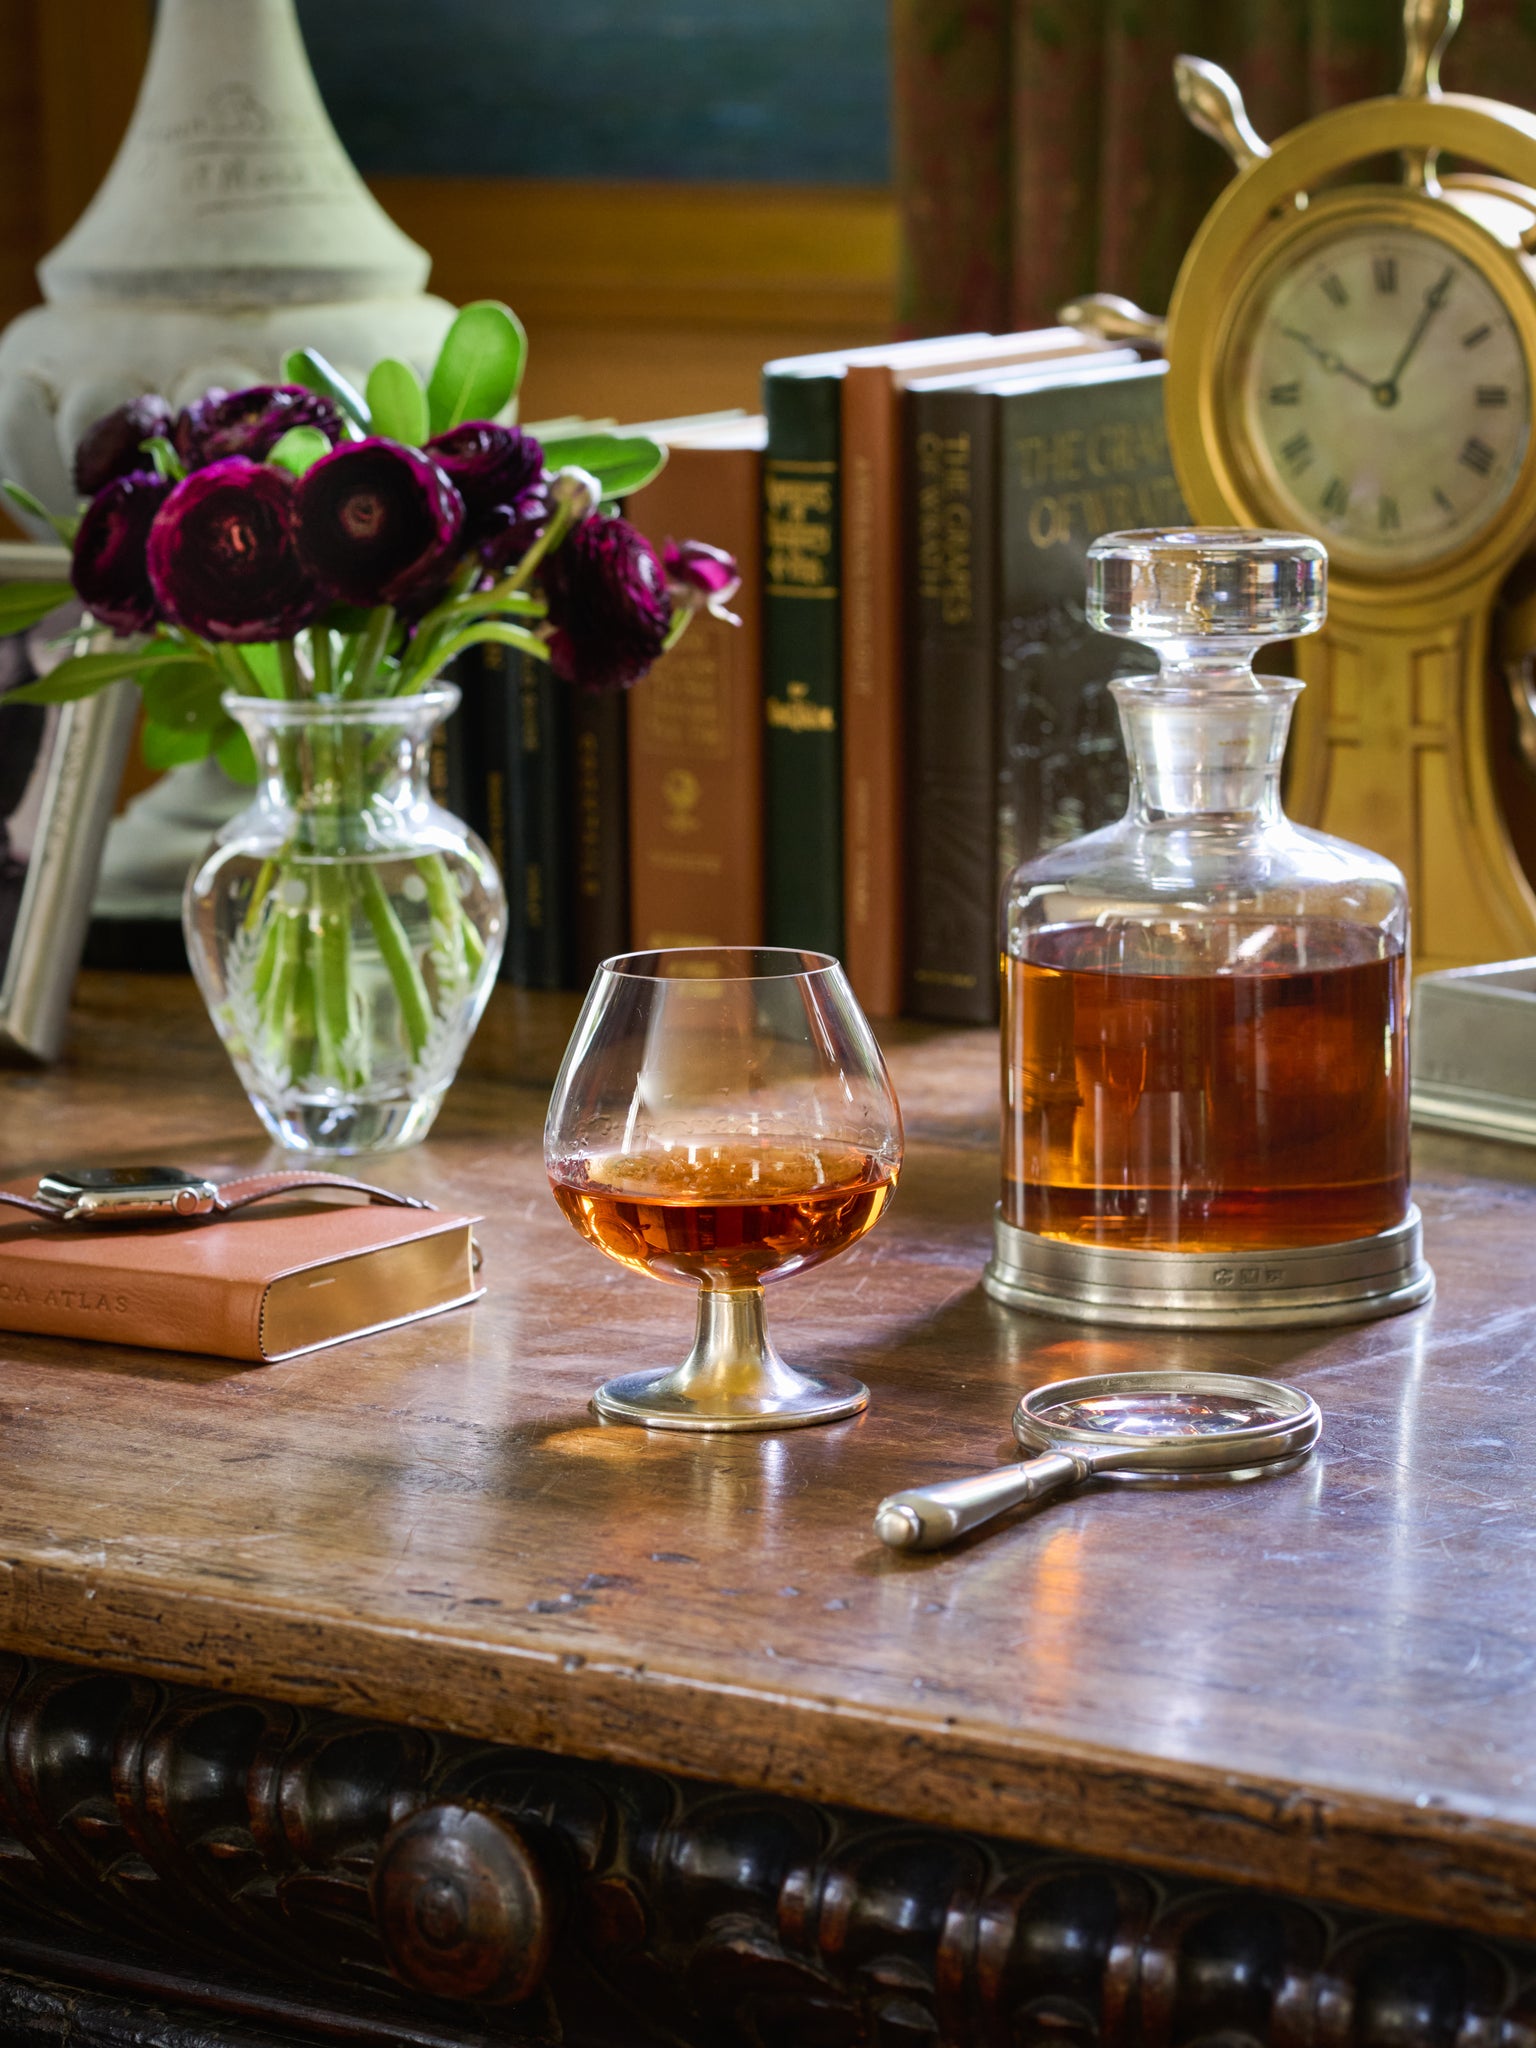 MATCH Pewter Cognac Glass Weston Table